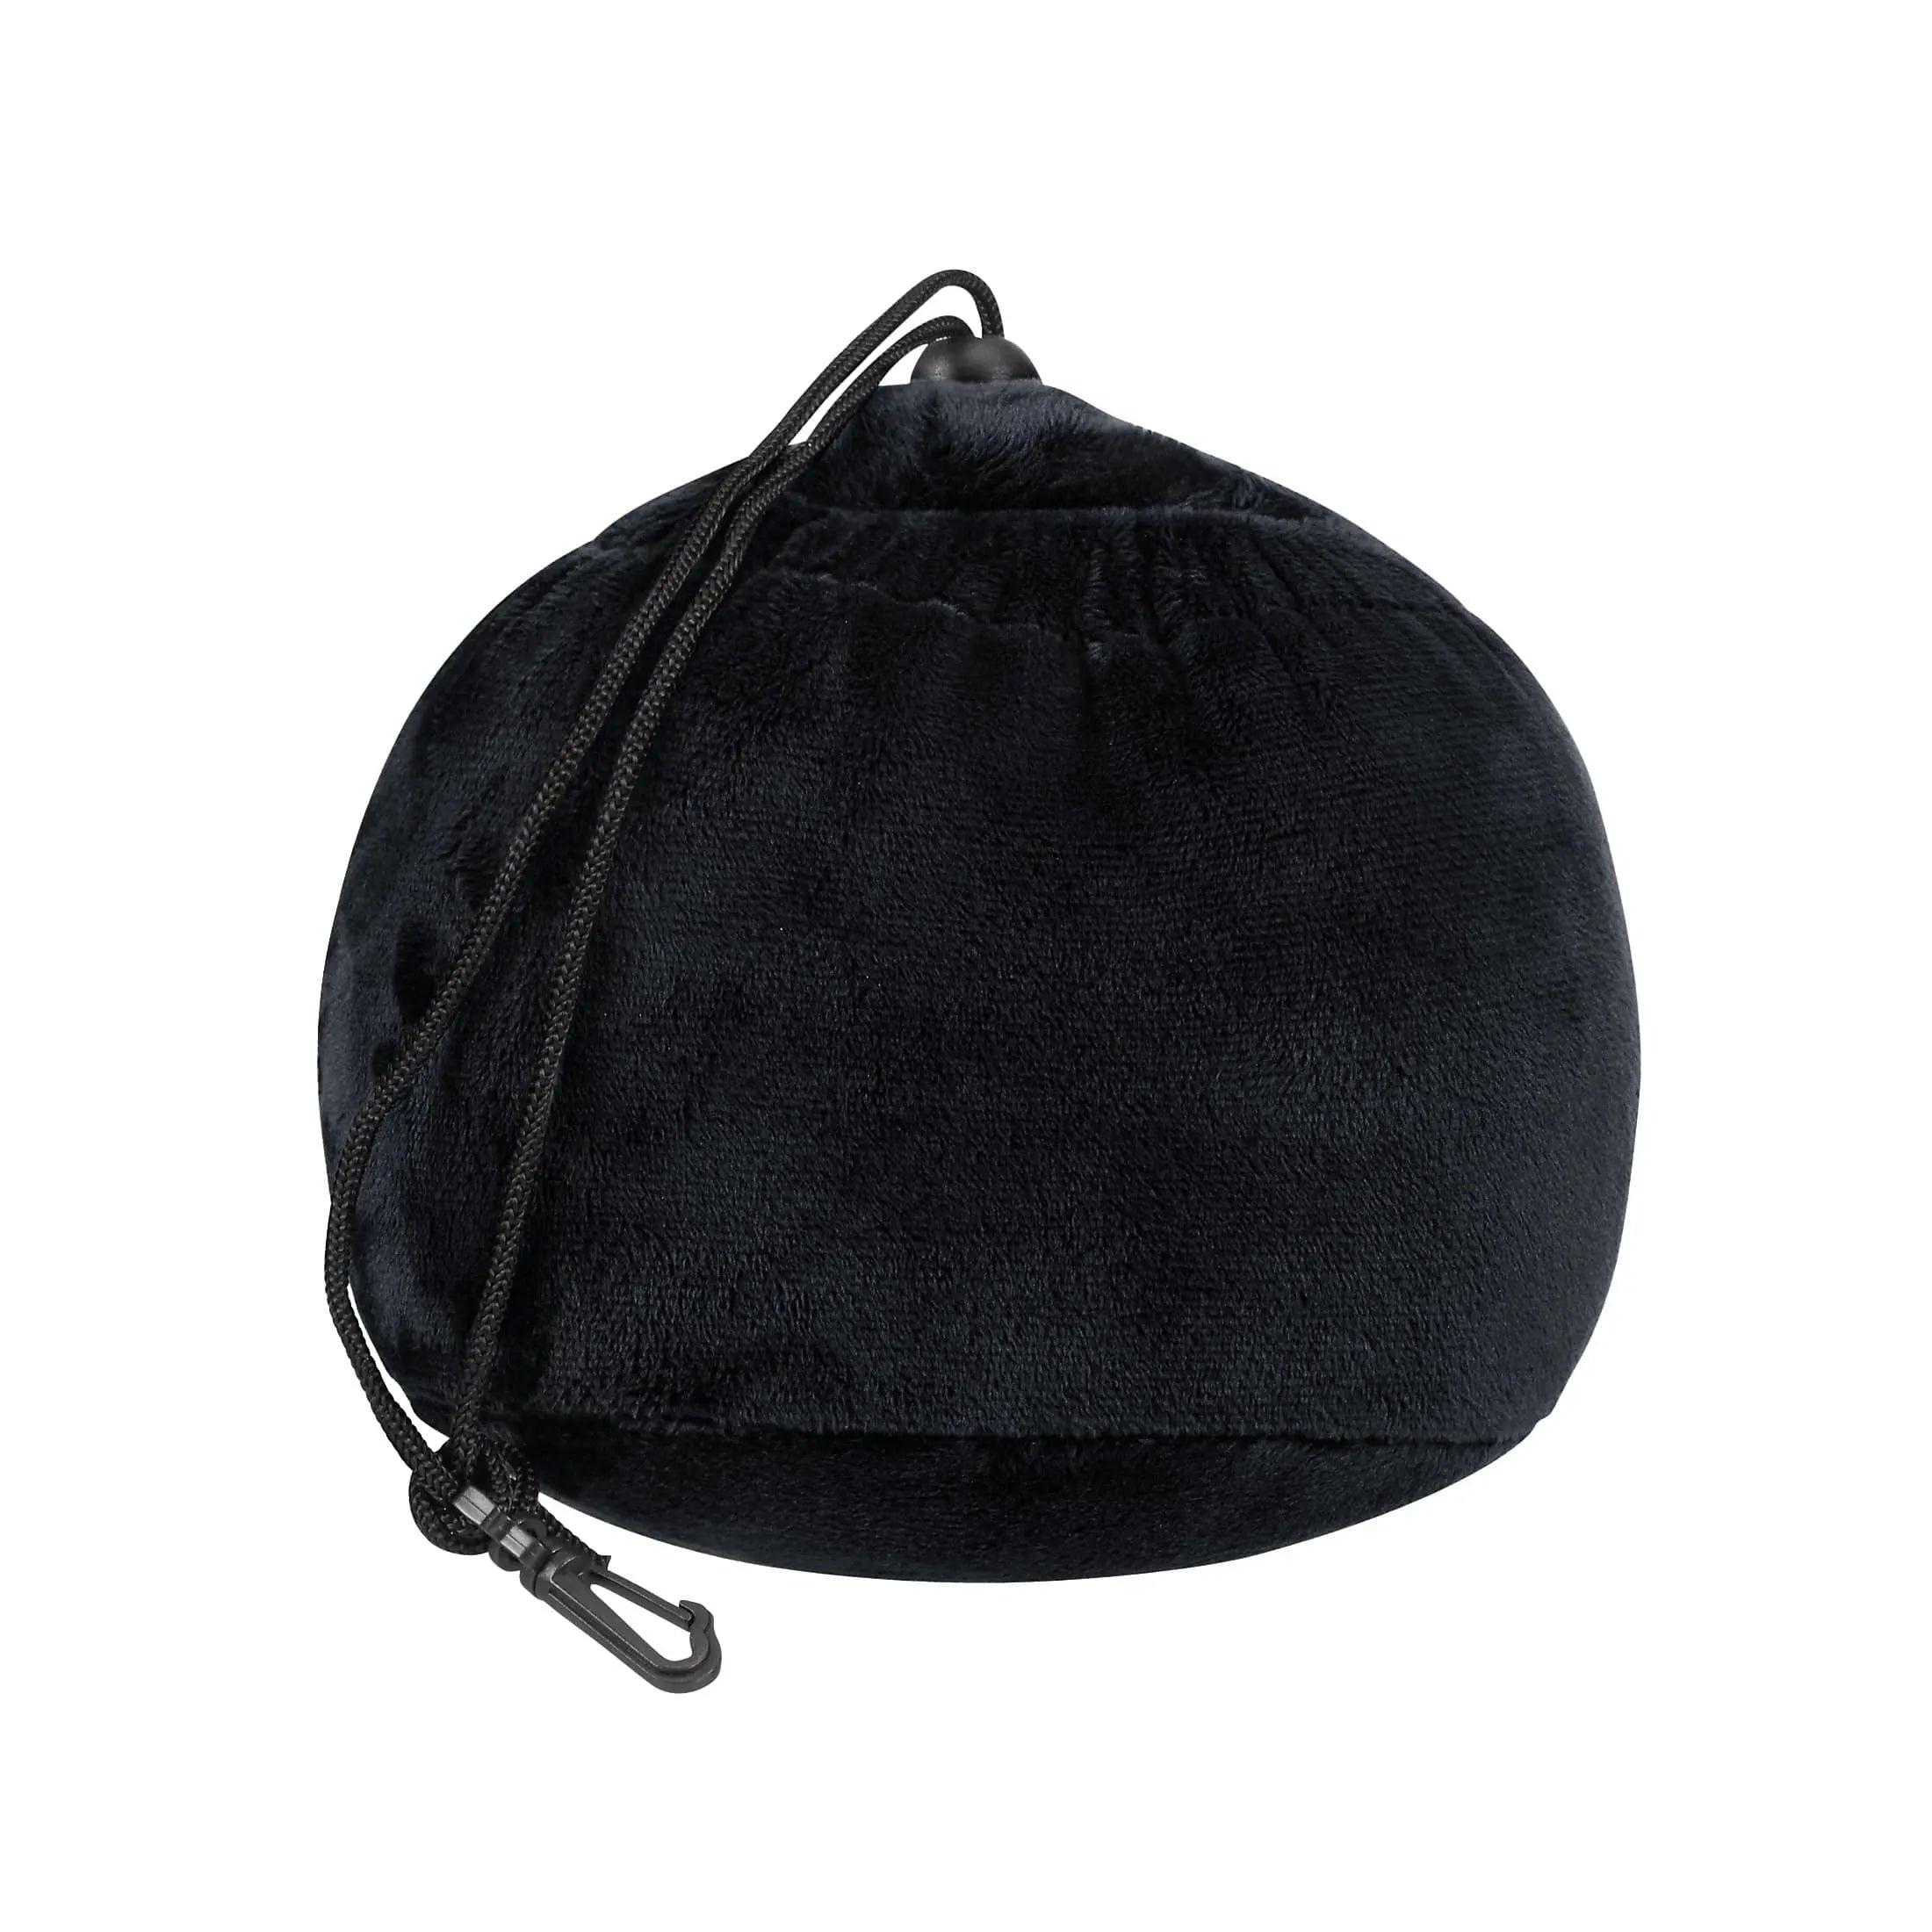 Samsonite Travel Accessories Memory Foam neck pillow - black